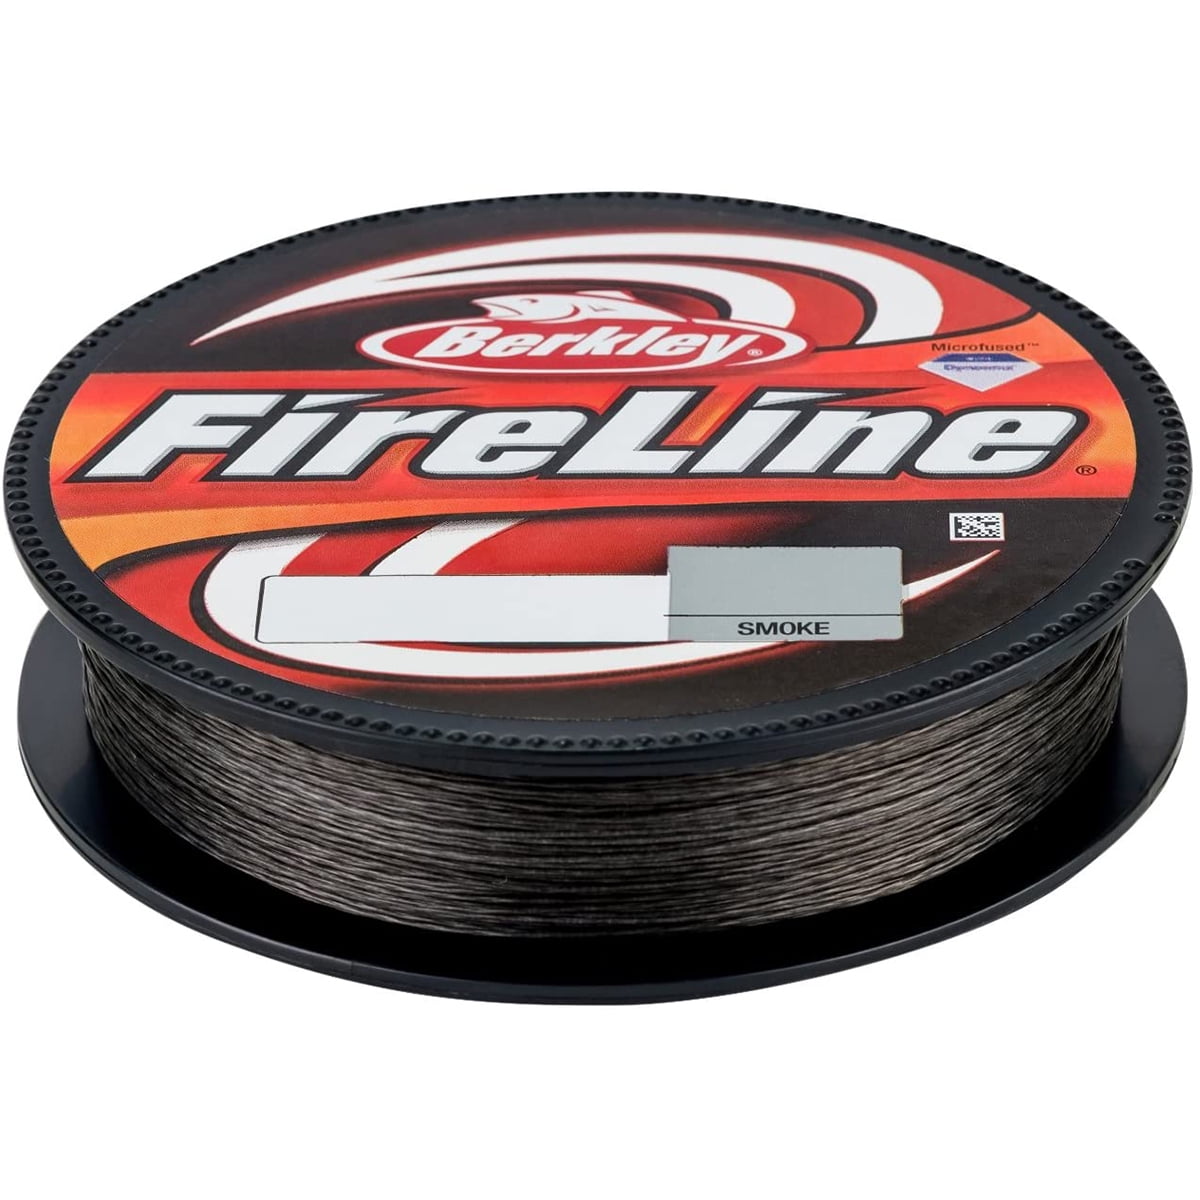 Berkley Fireline Fused Superline Braided Line Smoke/Crystal 100,125,300,1500yd 